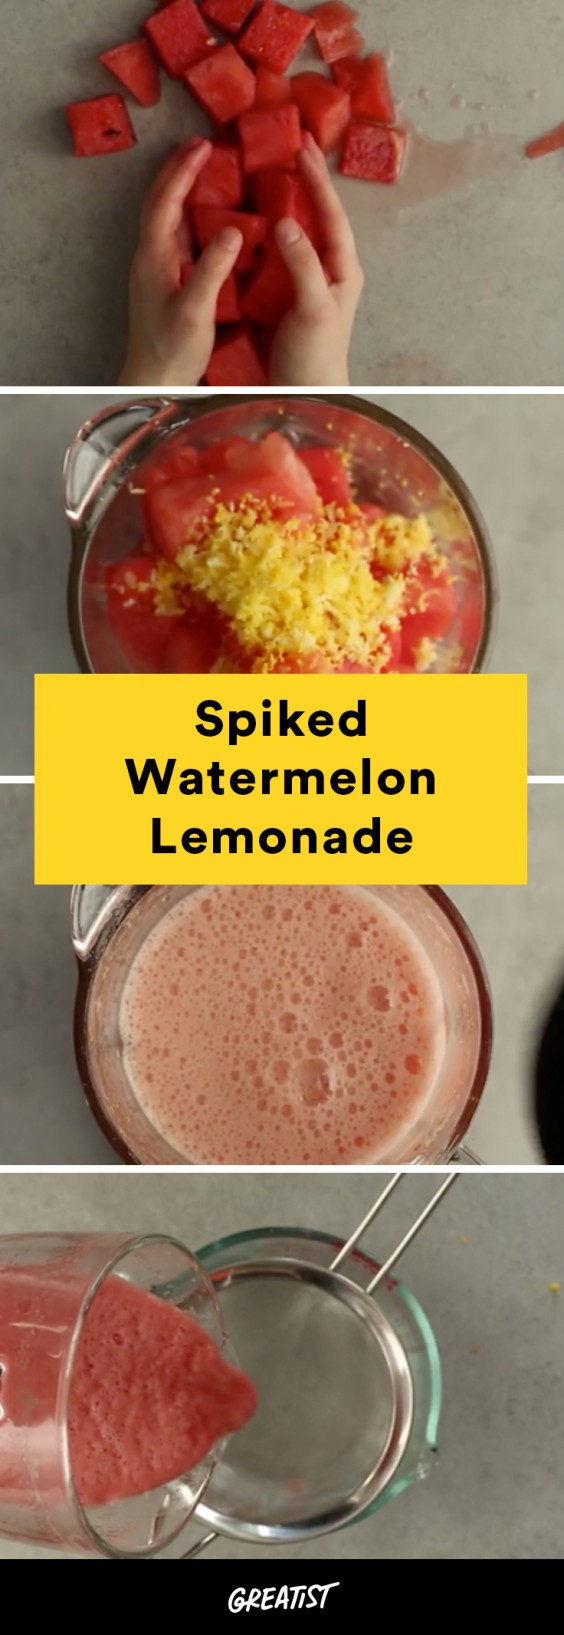 video: spiked watermelon lemonade